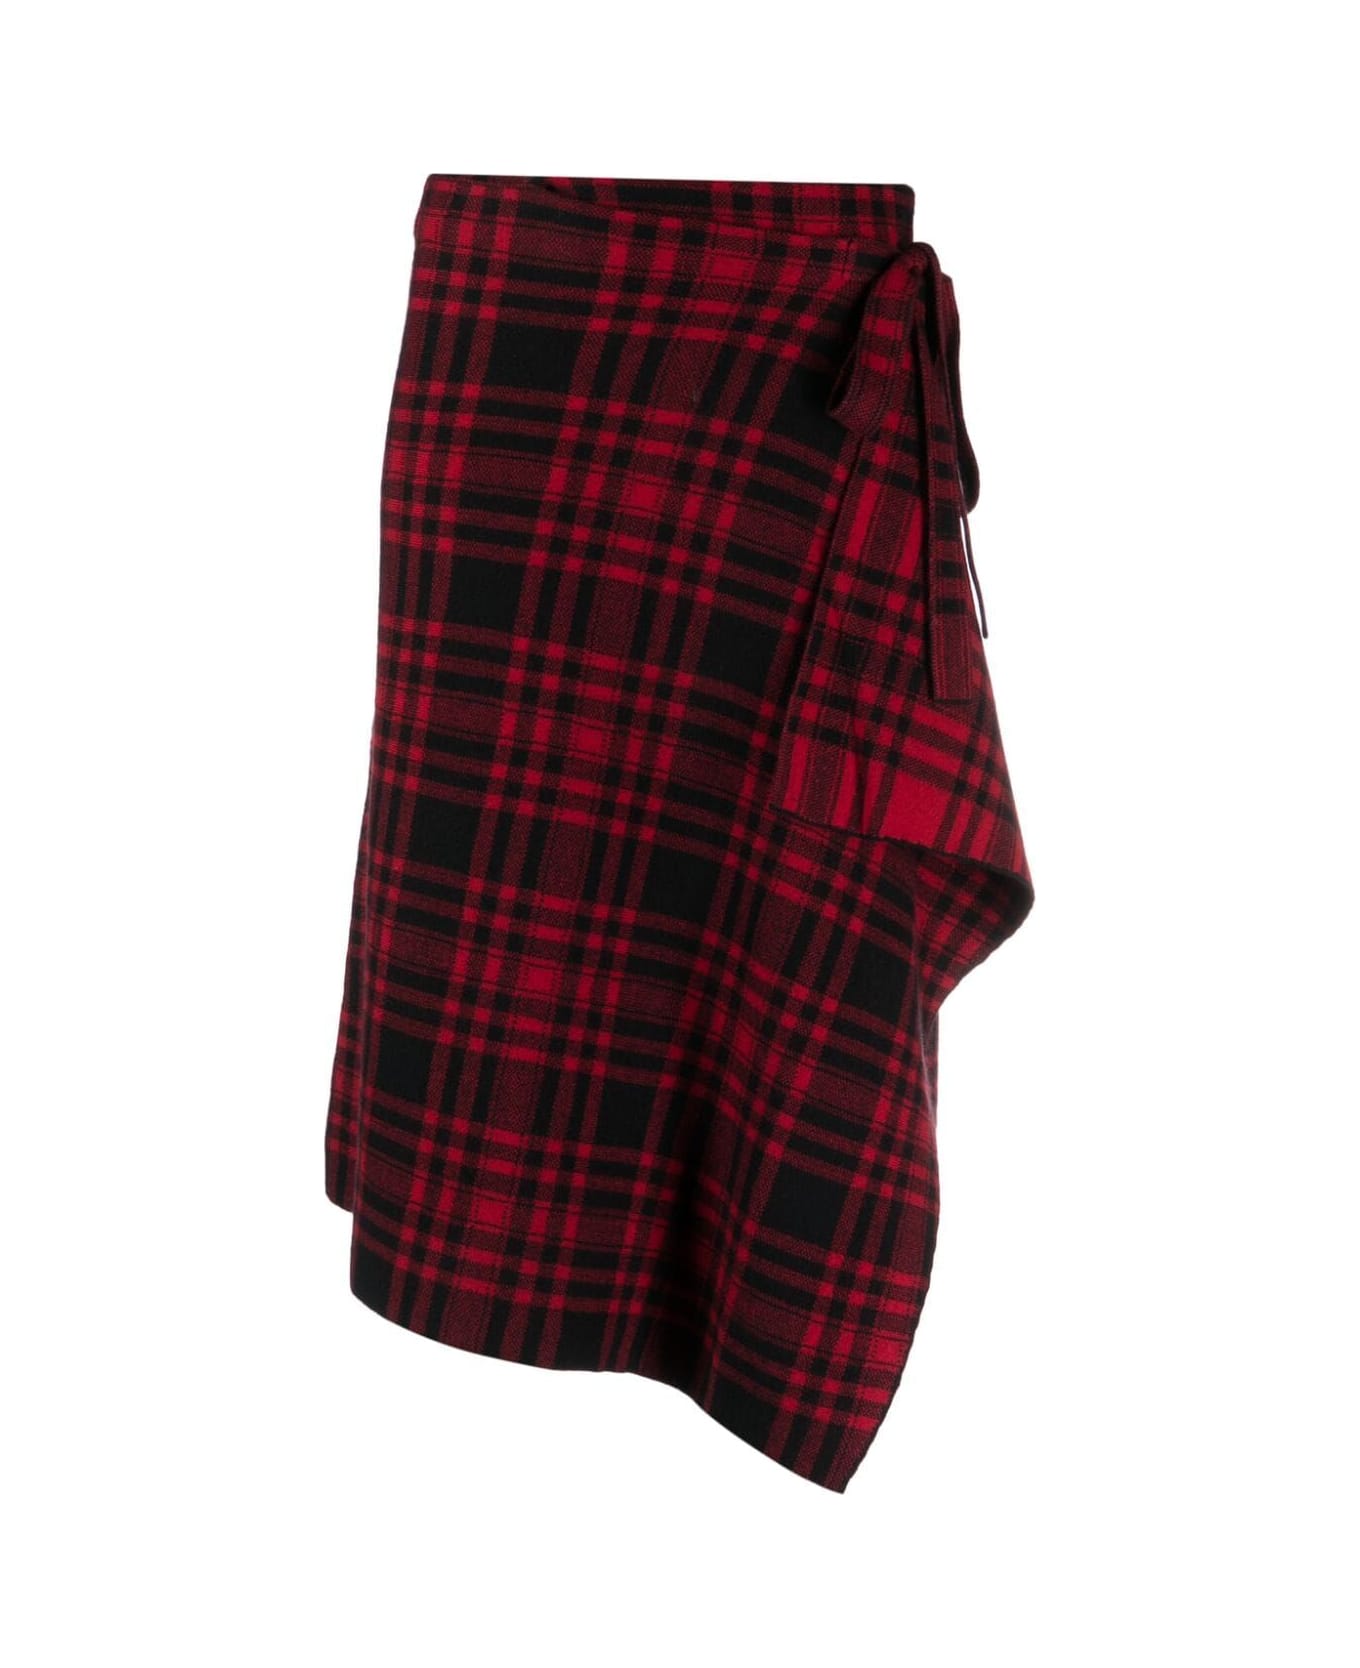 Polo Ralph Lauren Mid A Line Skirt - Red Black Plaid スカート